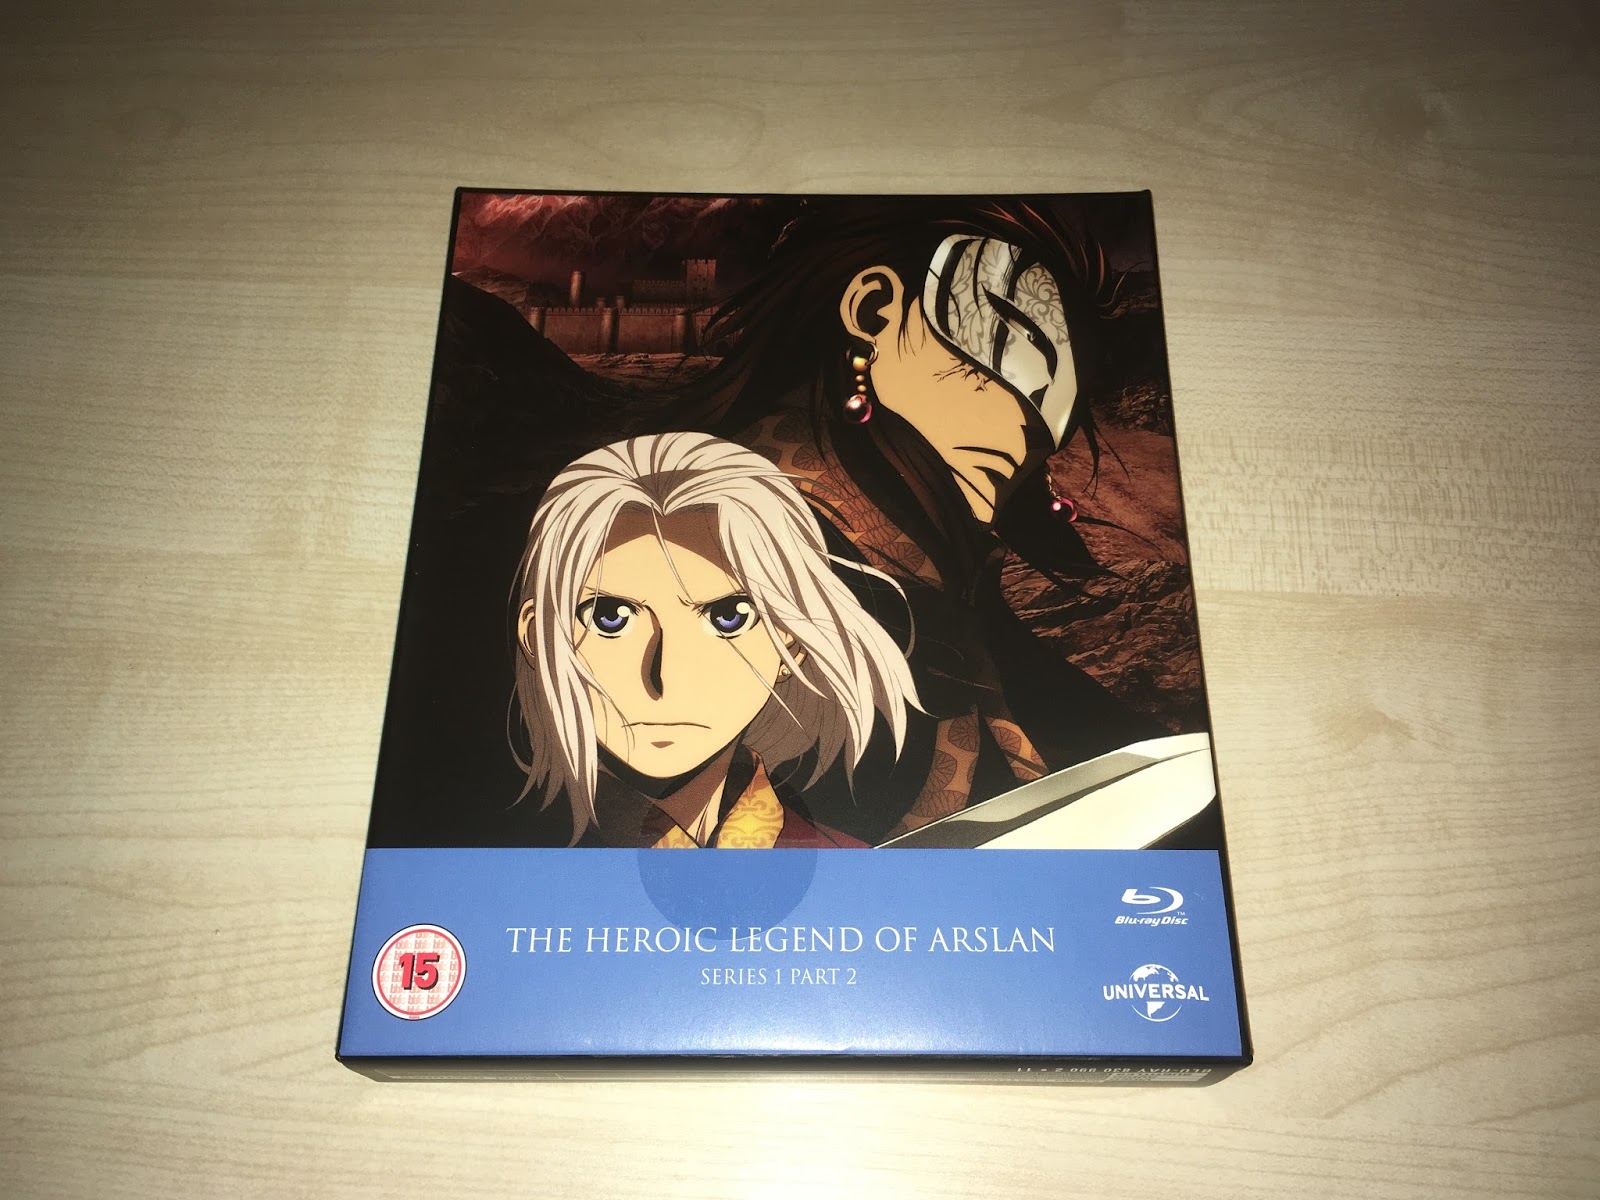 The Legend of the Legendary Heroes Season 1 Pt. 1 & 2 blu-ray/dvd